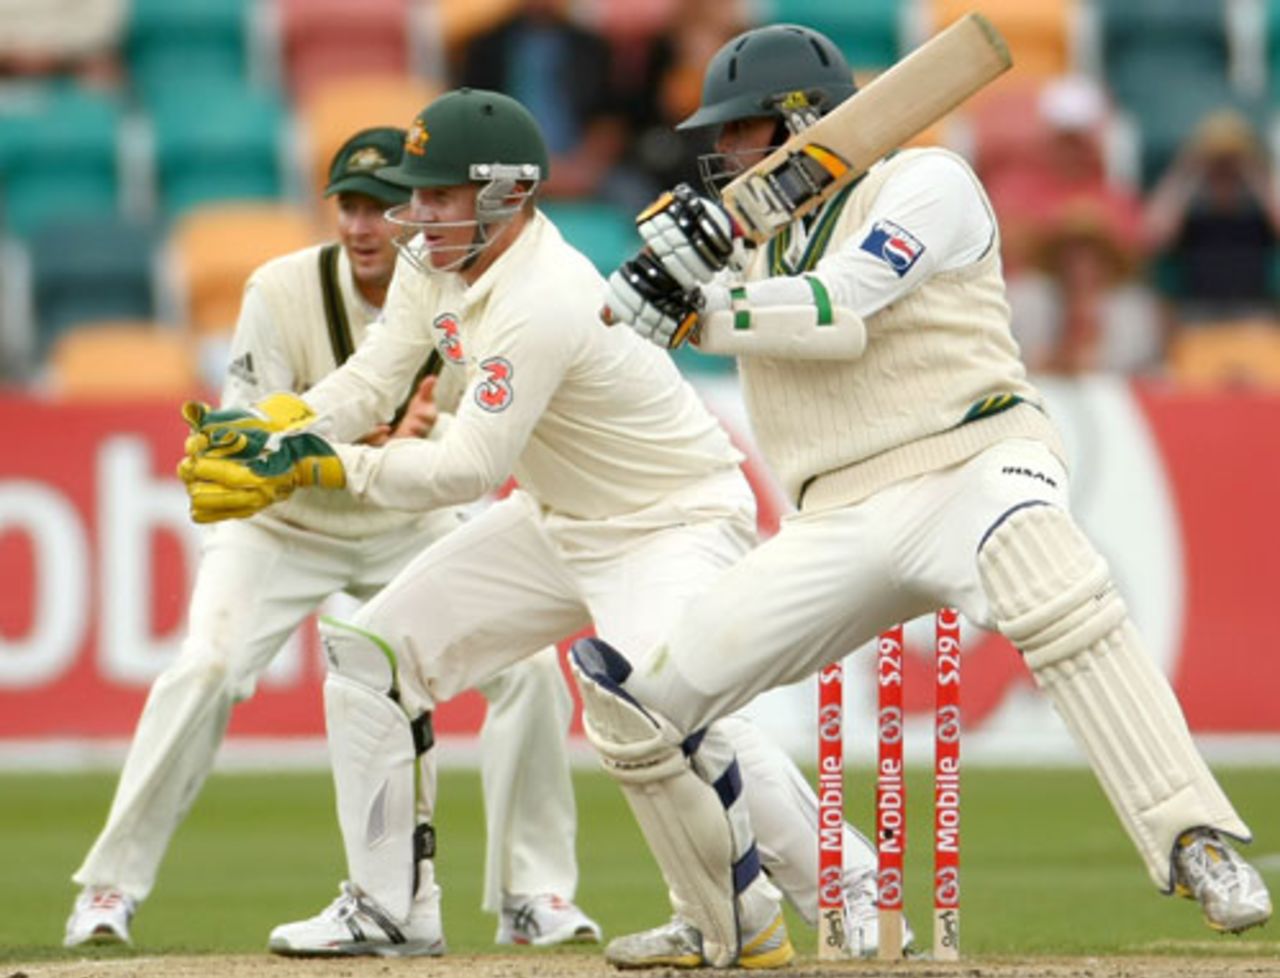 Khurram Manzoor cuts hard on the way to his half-century, 3rd Test, Australia v Pakistan, 5th day, Hobart, January 18, 2010